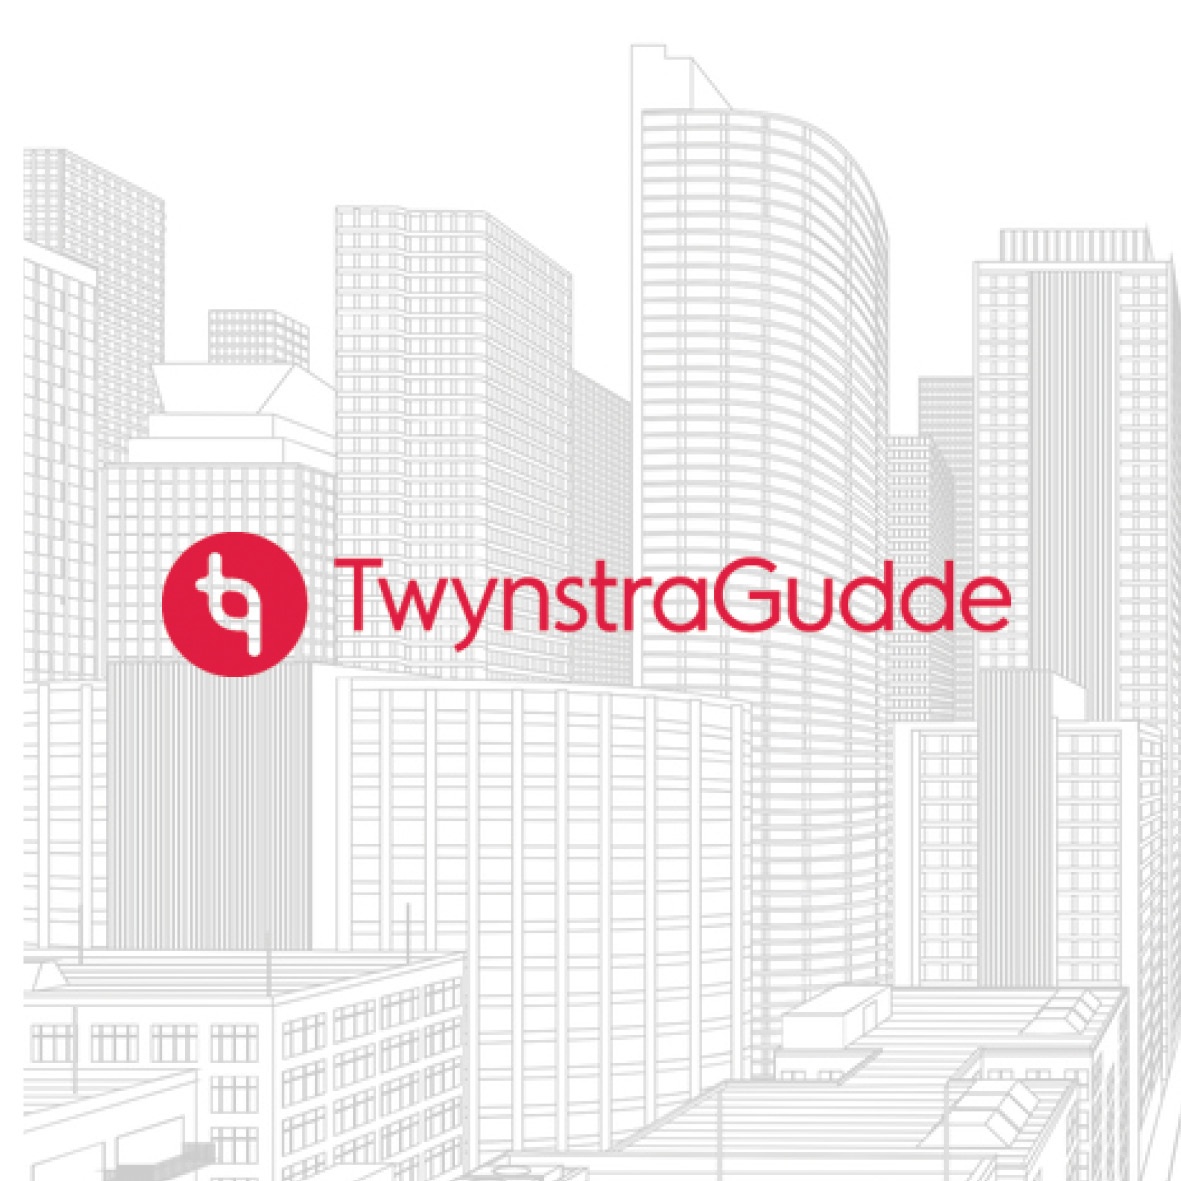 Twynstragudde Logo Website